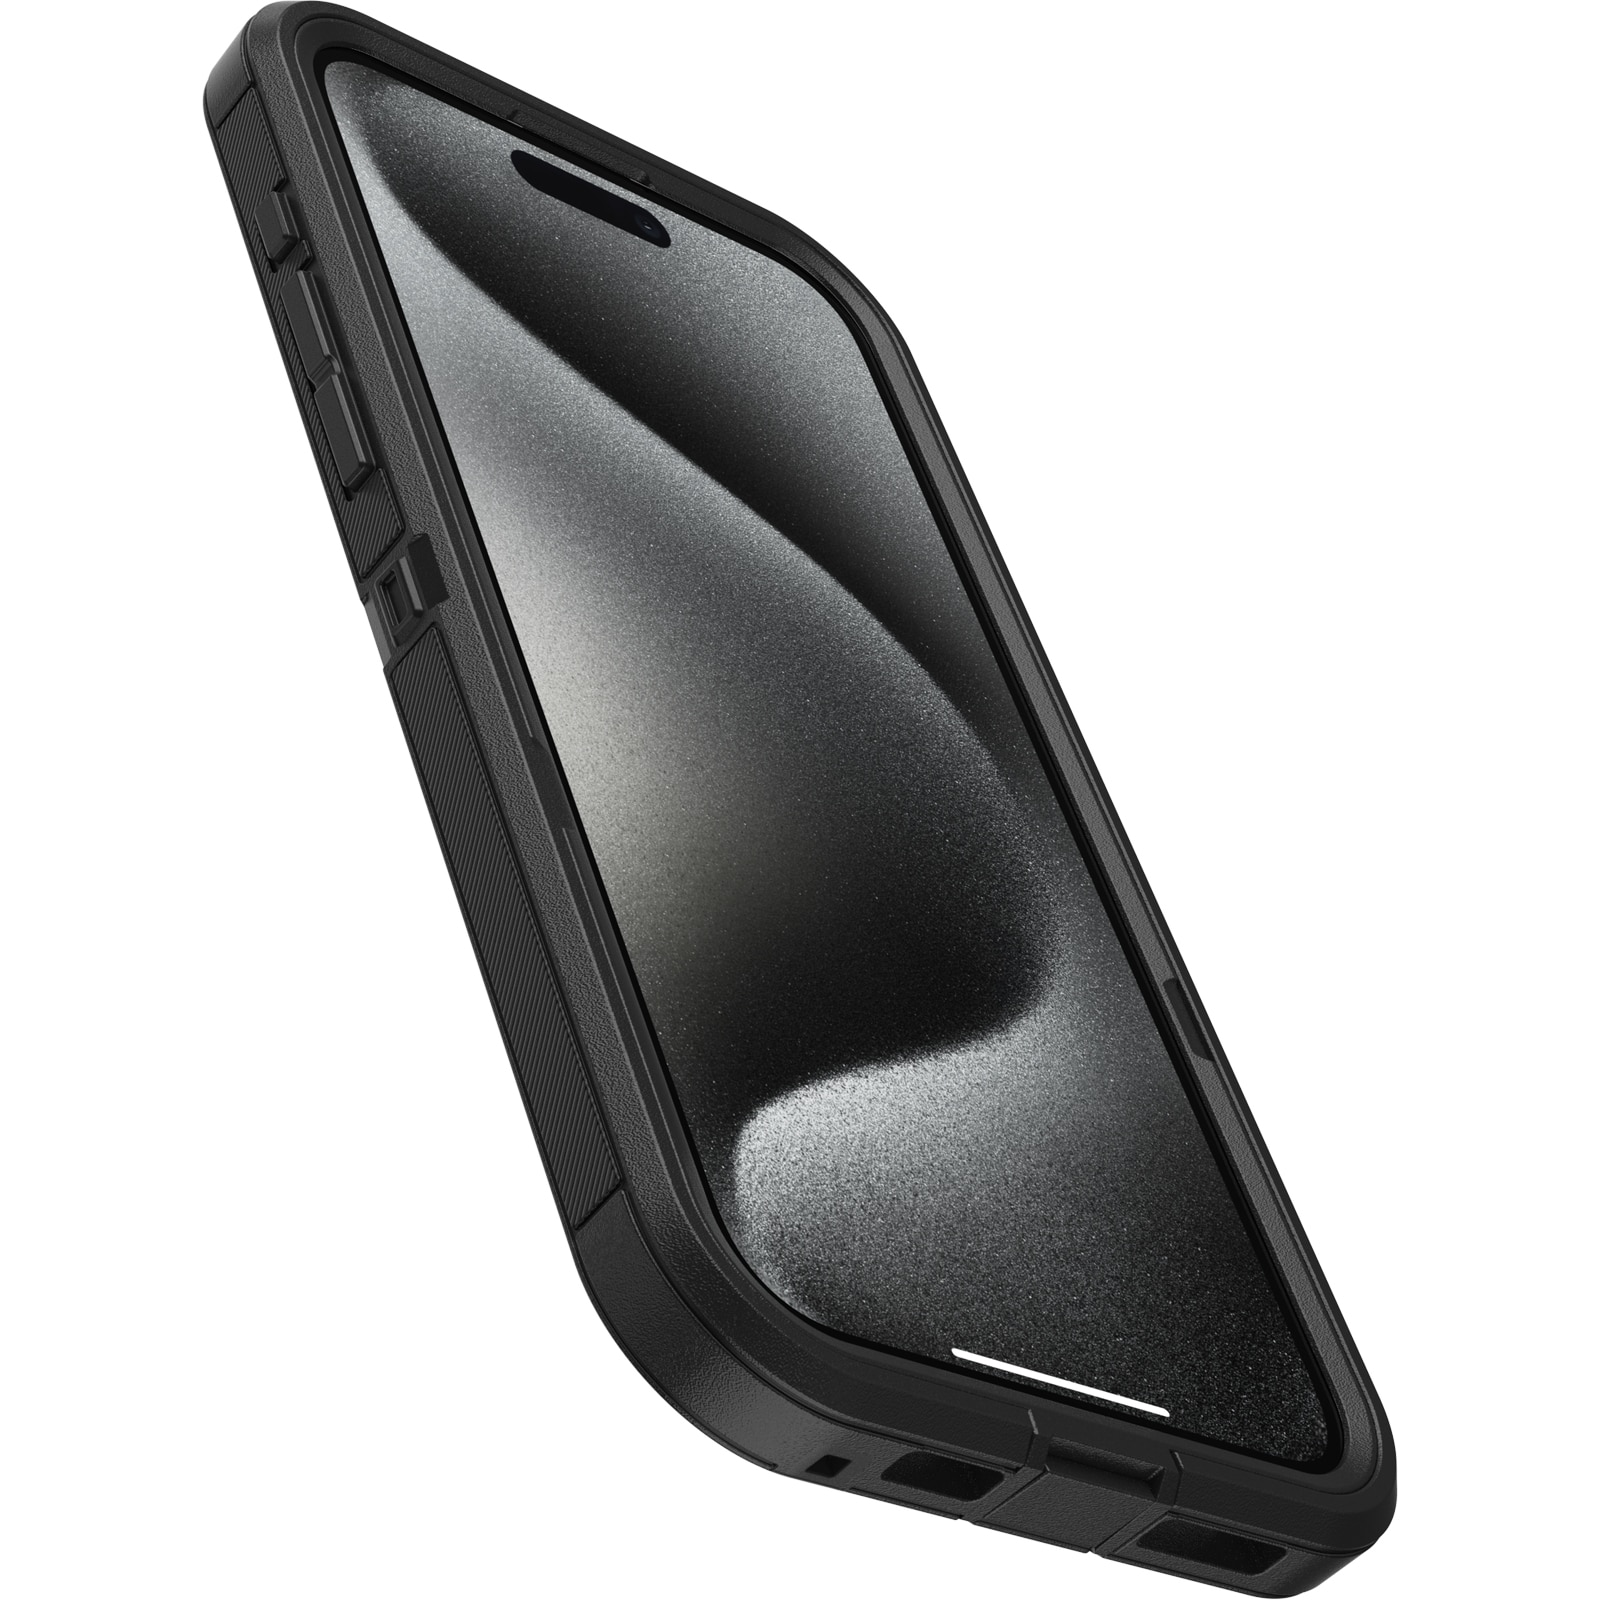 Defender XT Deksel iPhone 15 Pro Max svart